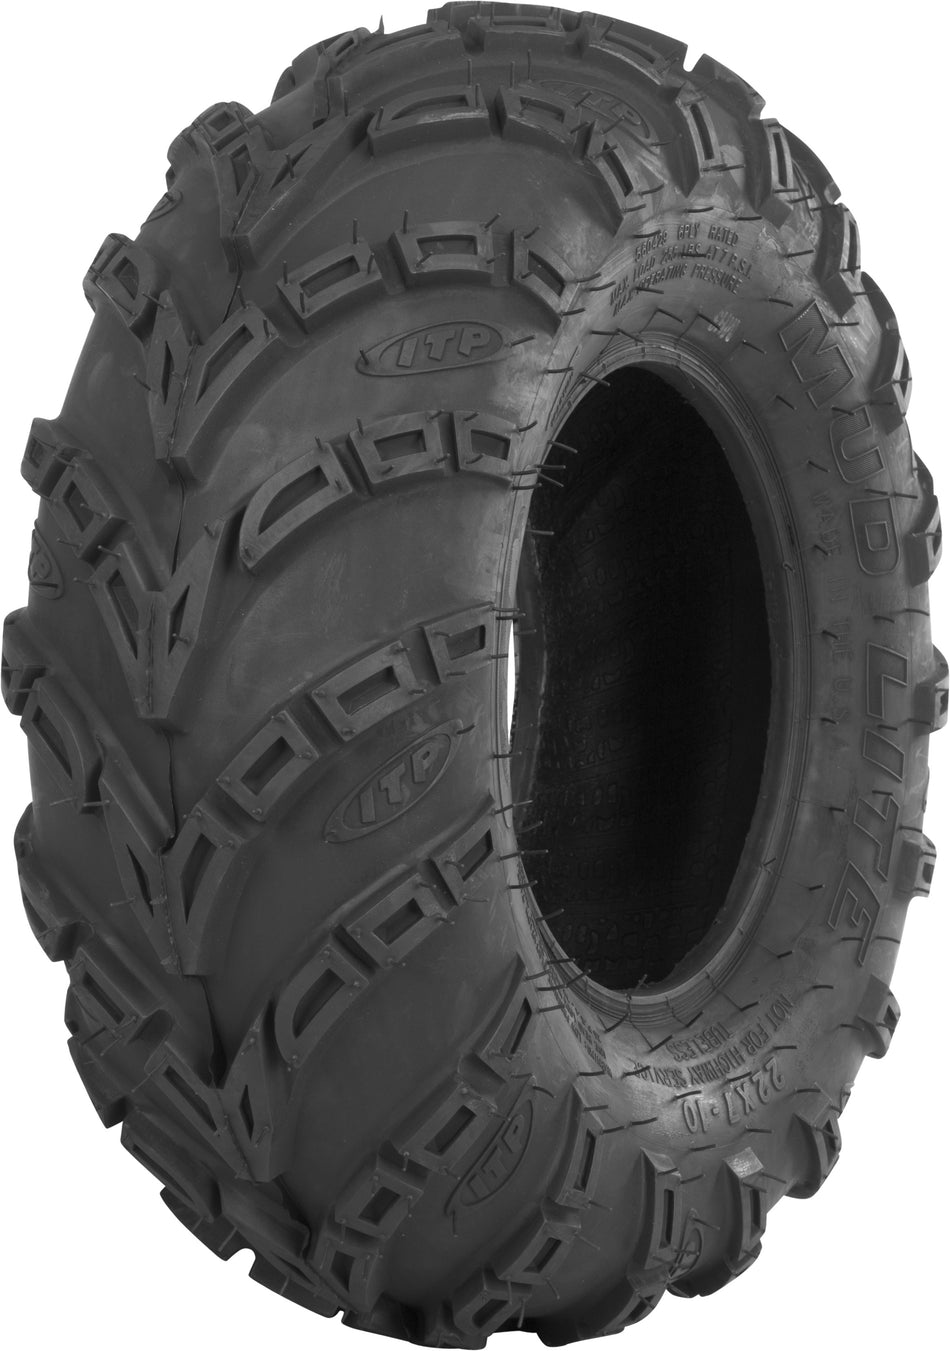 ITP Tire Mud Lite Rear 24x10-11 Lr-395lbs Bias 56A328